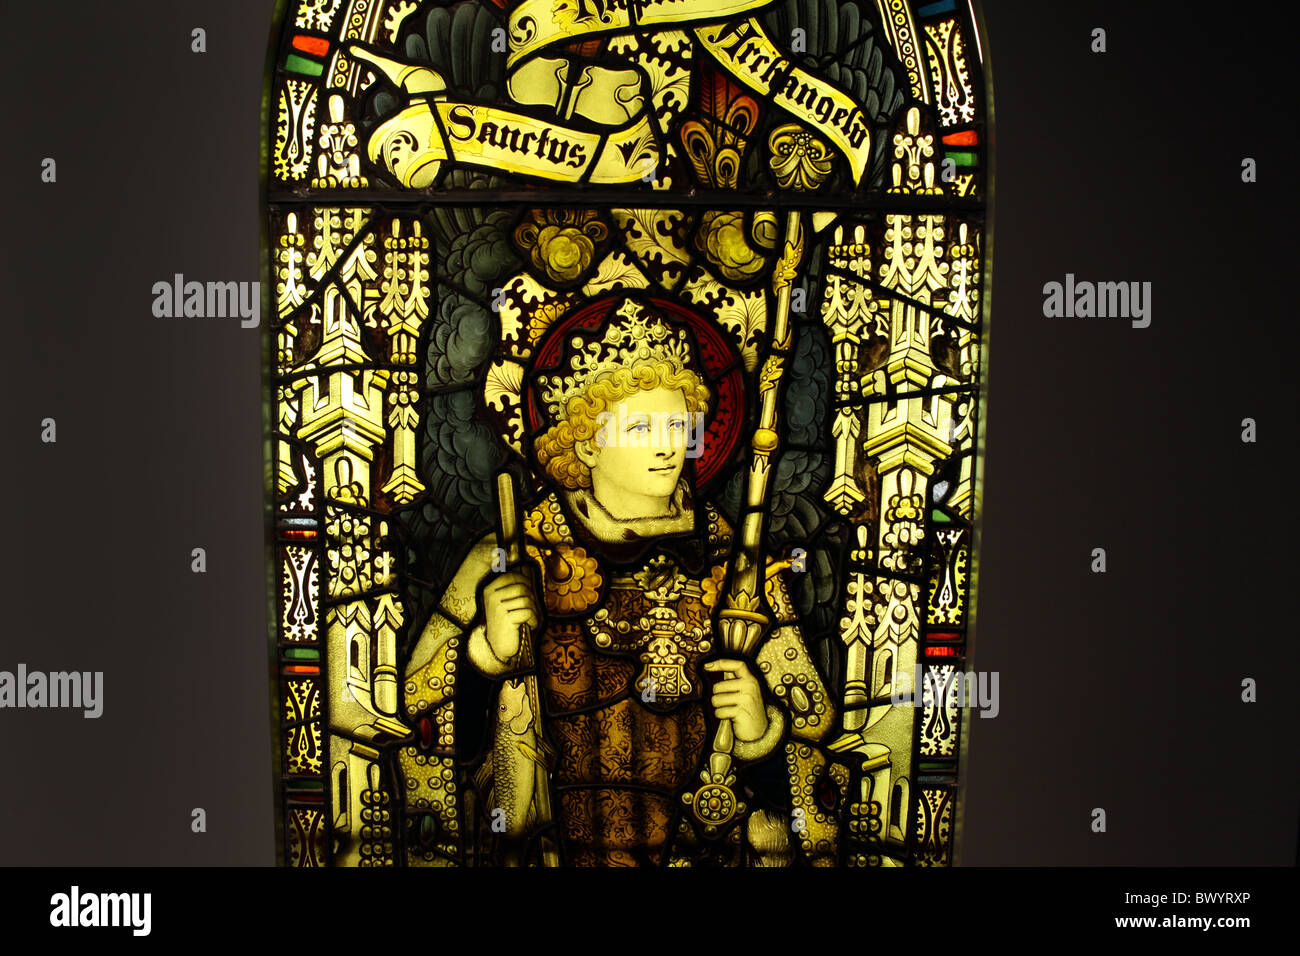 A stained glass window inside Edinburgh Castle in Scotland. Stock Photo